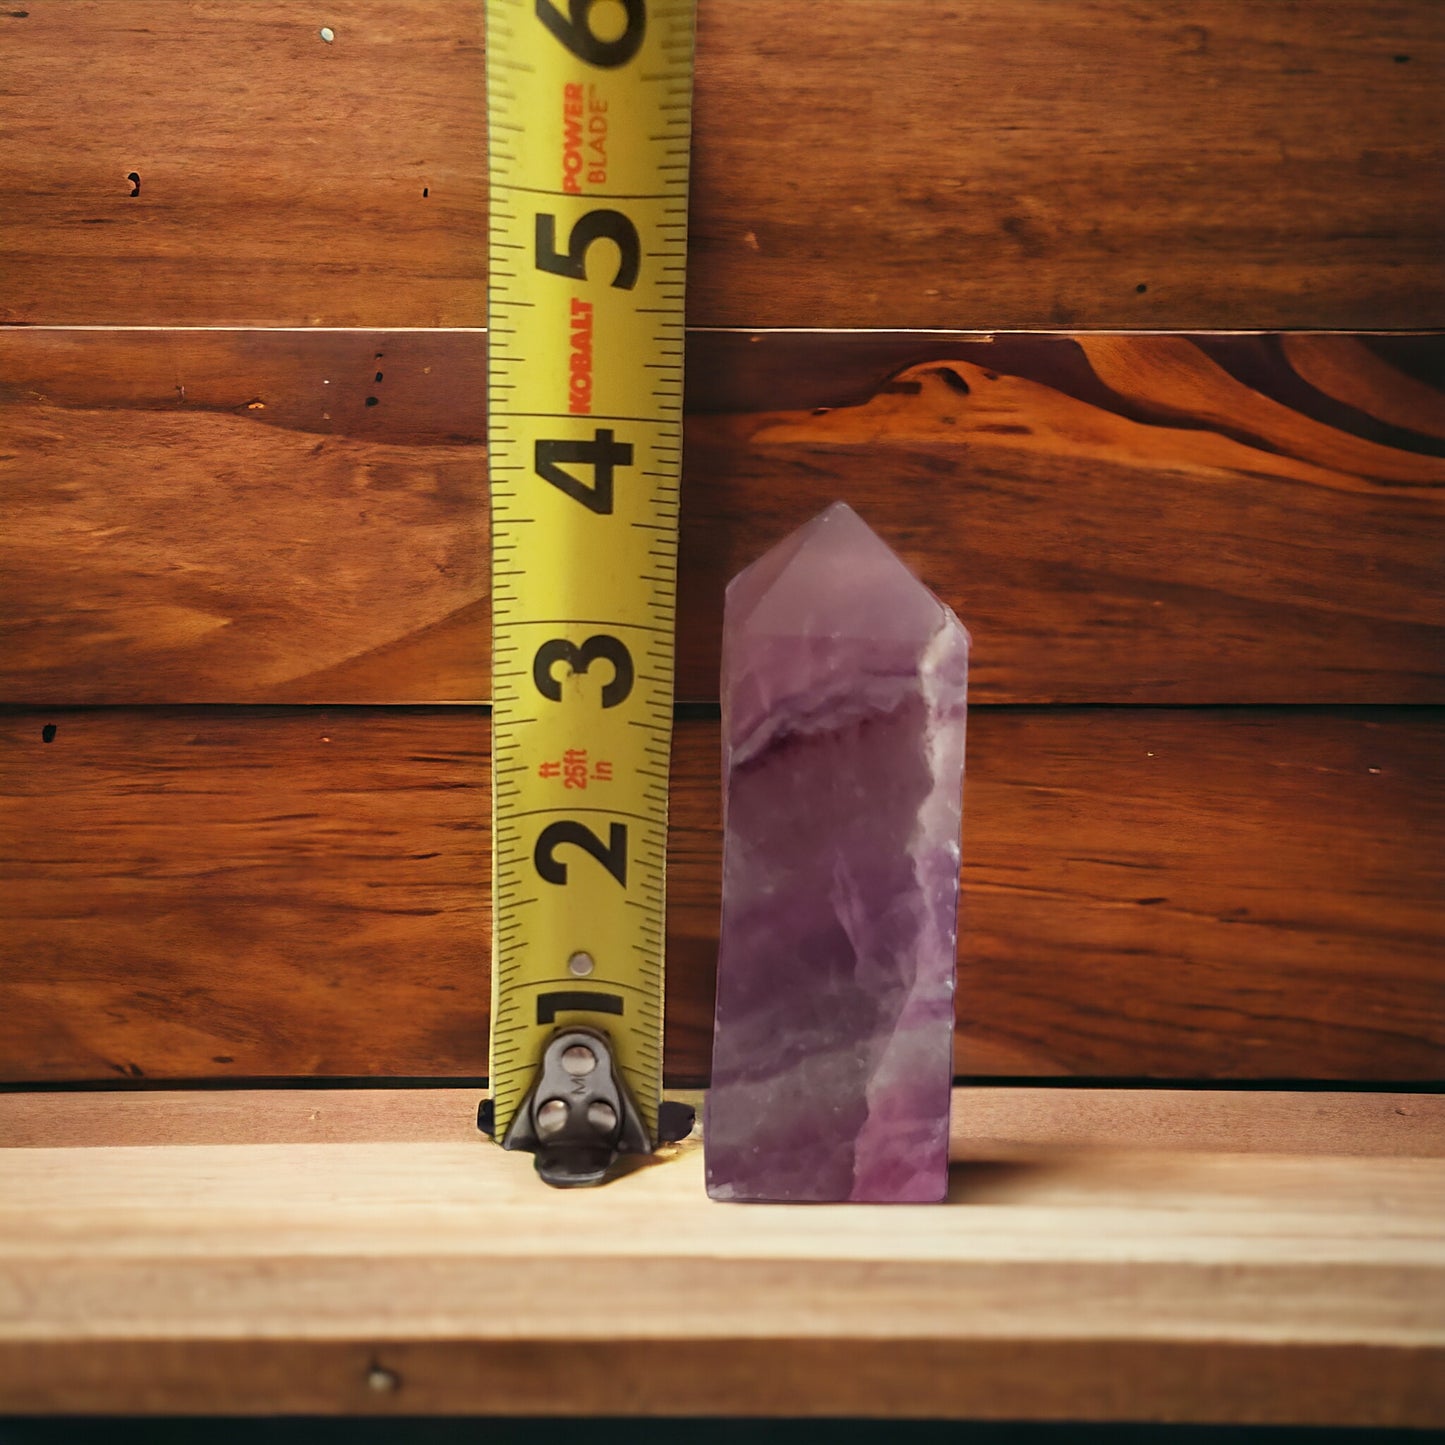 Purple Fluorite Crystal Tower